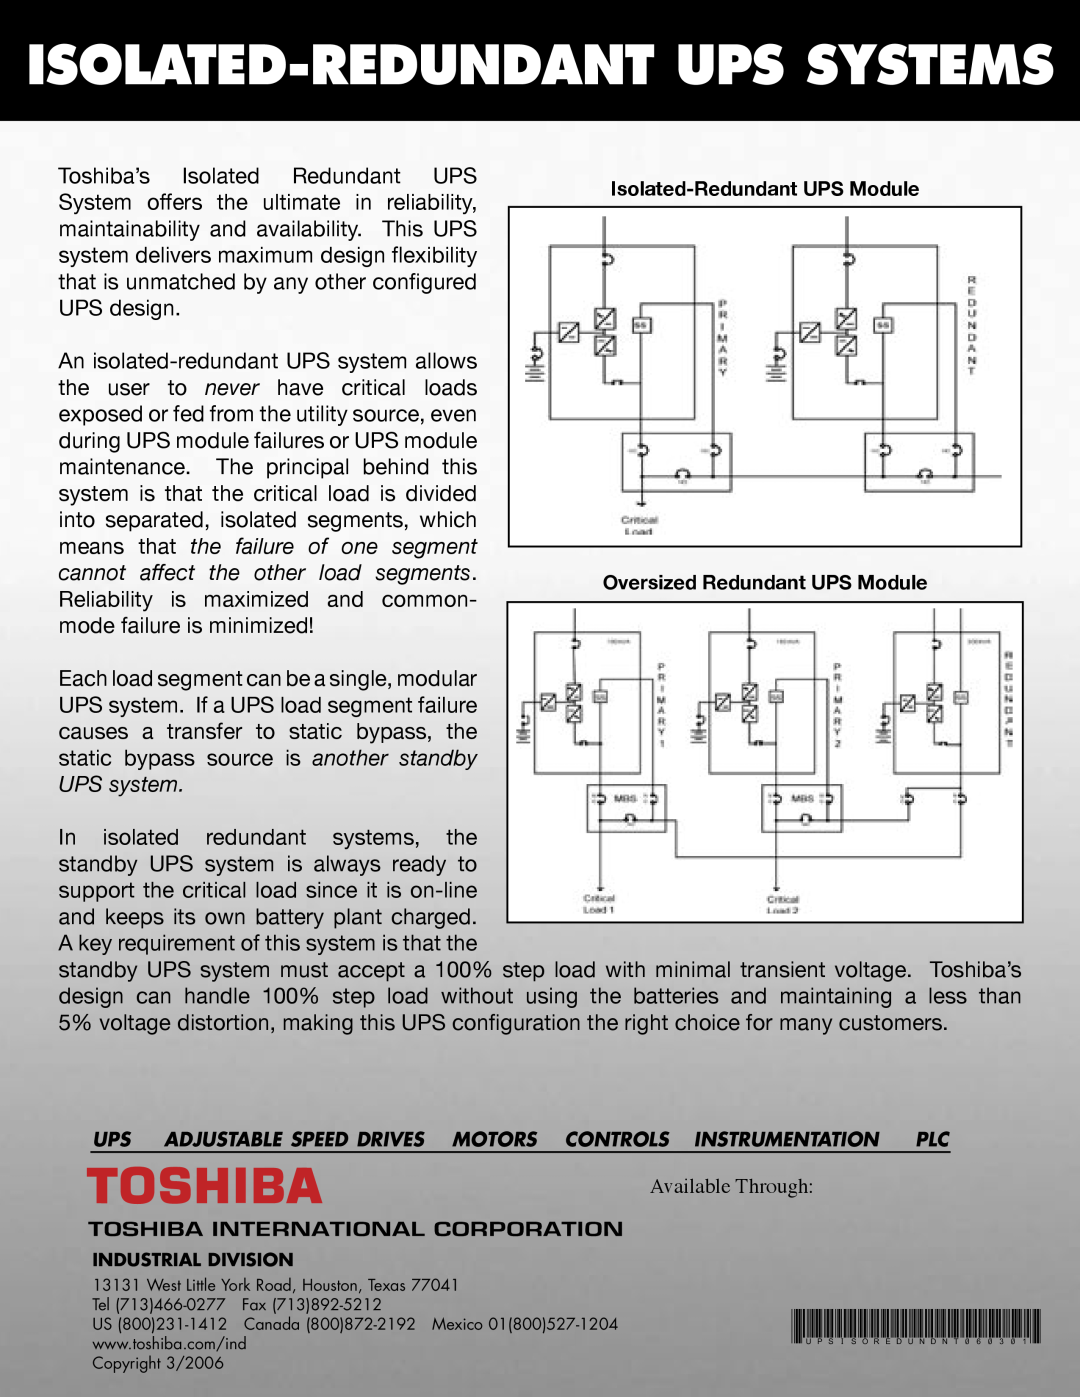 Toshiba Power Supply manual Isolated-Redundant Ups Systems, Available Through 